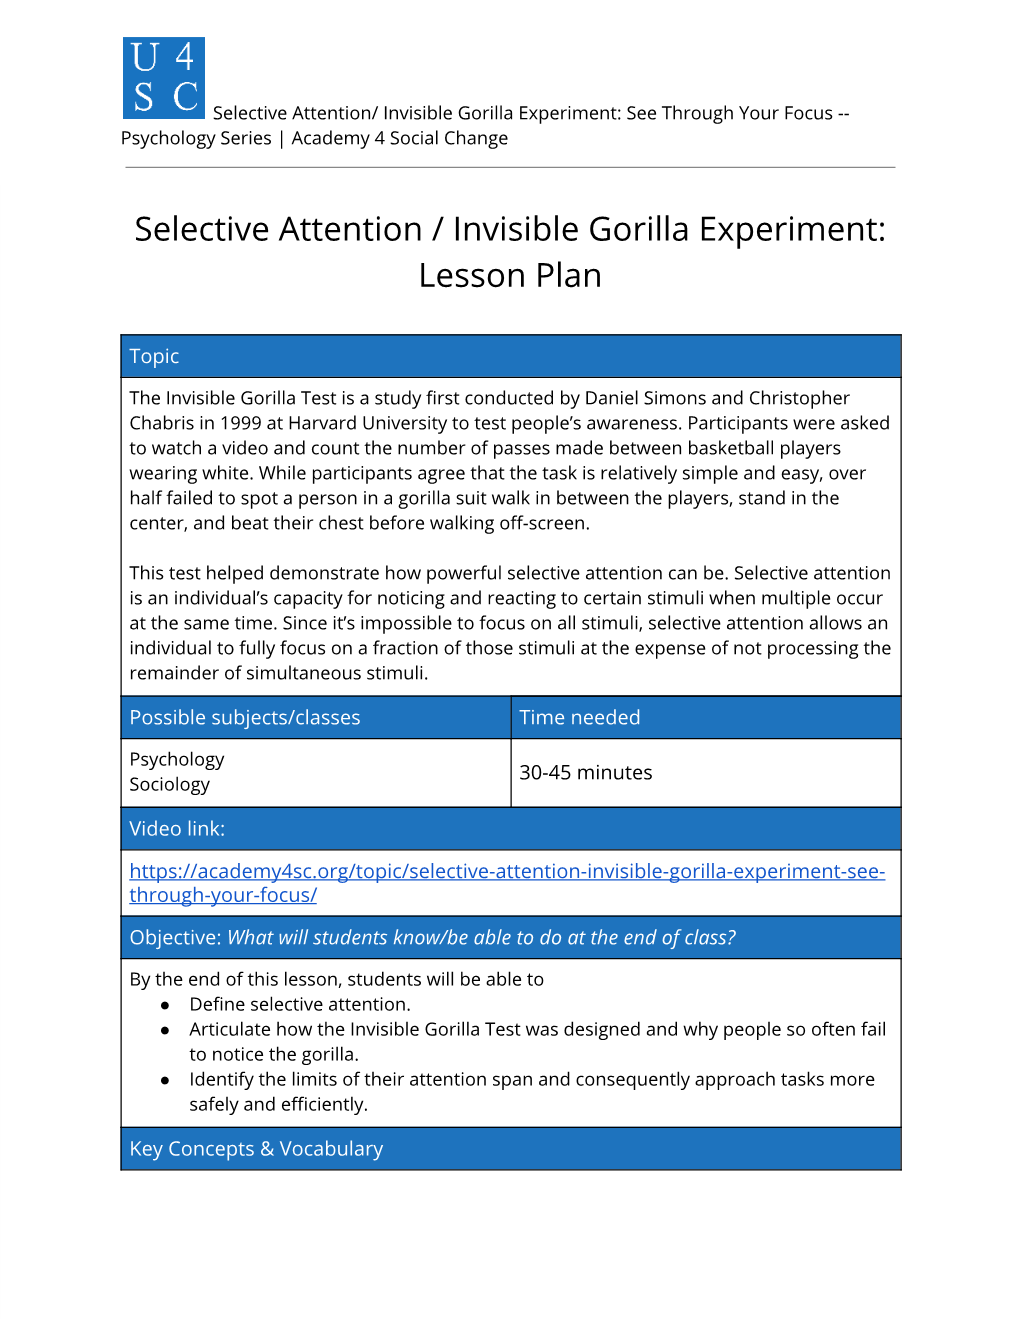 Selective Attention / Invisible Gorilla Experiment: Lesson Plan